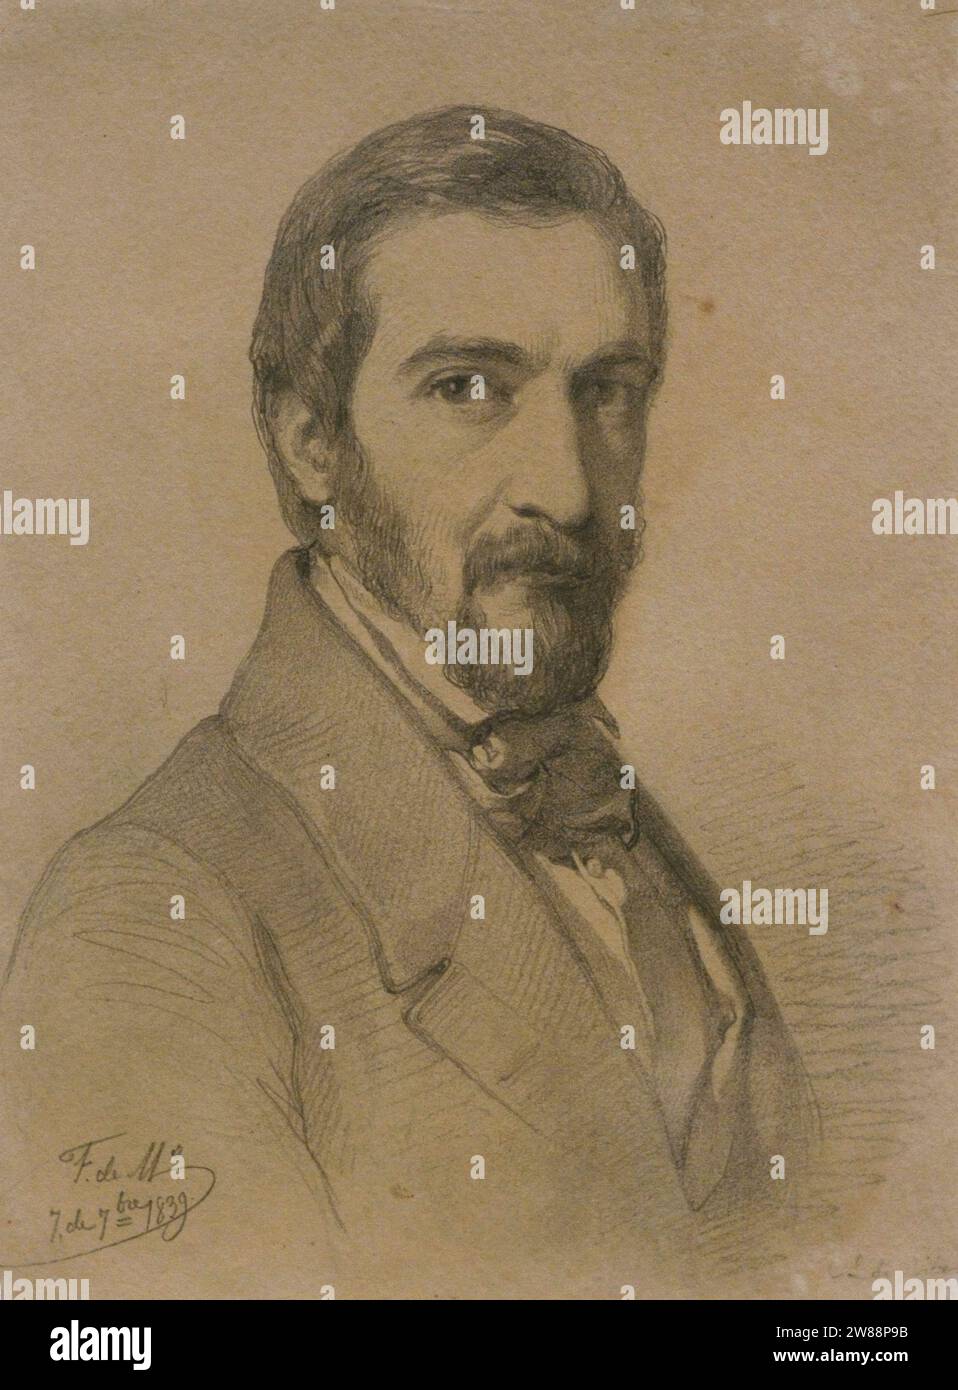 Carlos Luis de Ribera (1815-1891). Spanish painter. Portrait by Federico de Madrazo (1815-1894), 1839. Pencil on agarbanced paper, 215 x 165 mm. Prado Museum. Madrid. Spain. Stock Photo